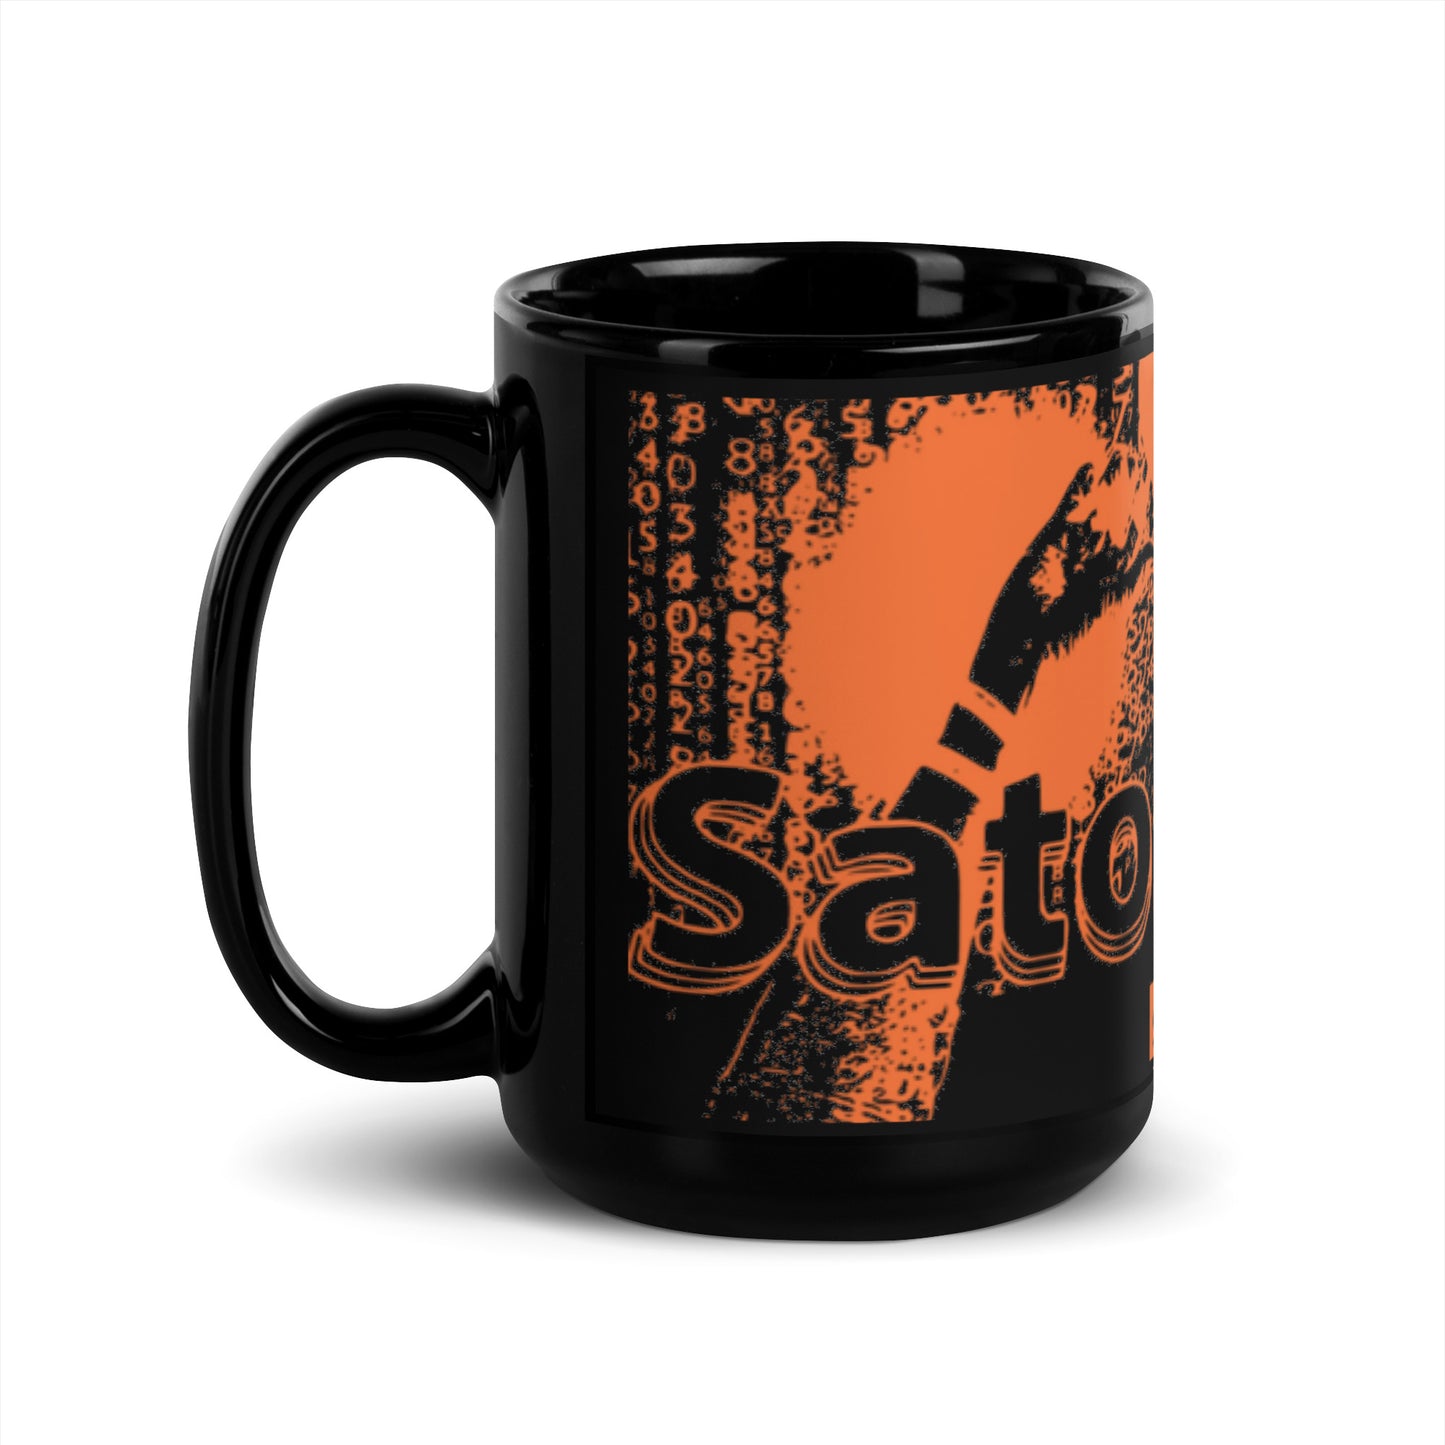 Satoshi '73 - Black Glossy Mug